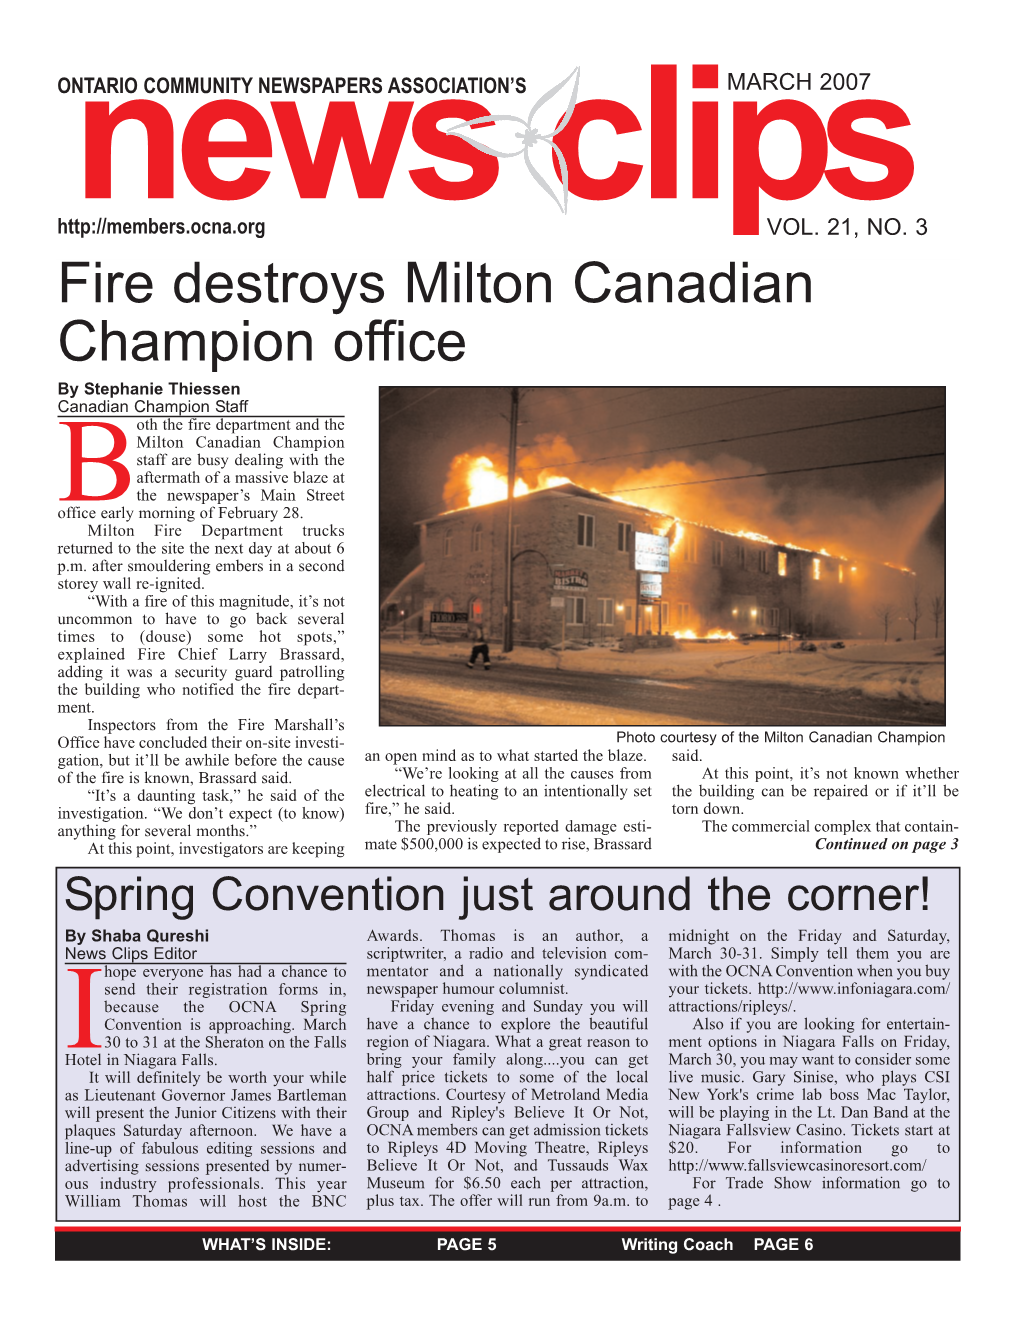 Fire Destroys Milton Canadian Champion Office